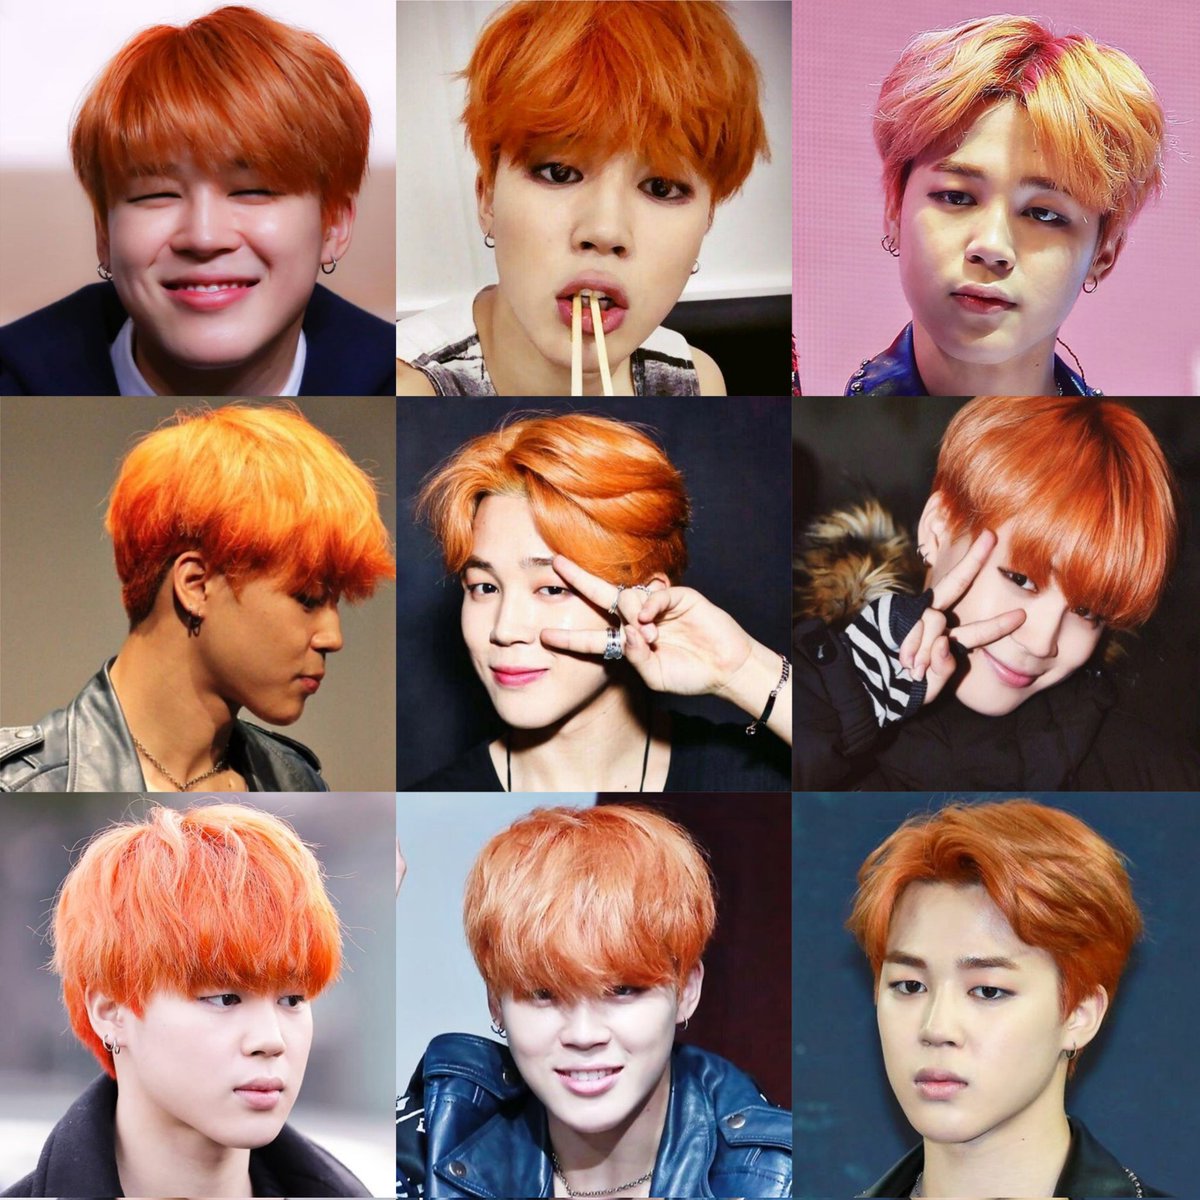 jimin’s orange hair